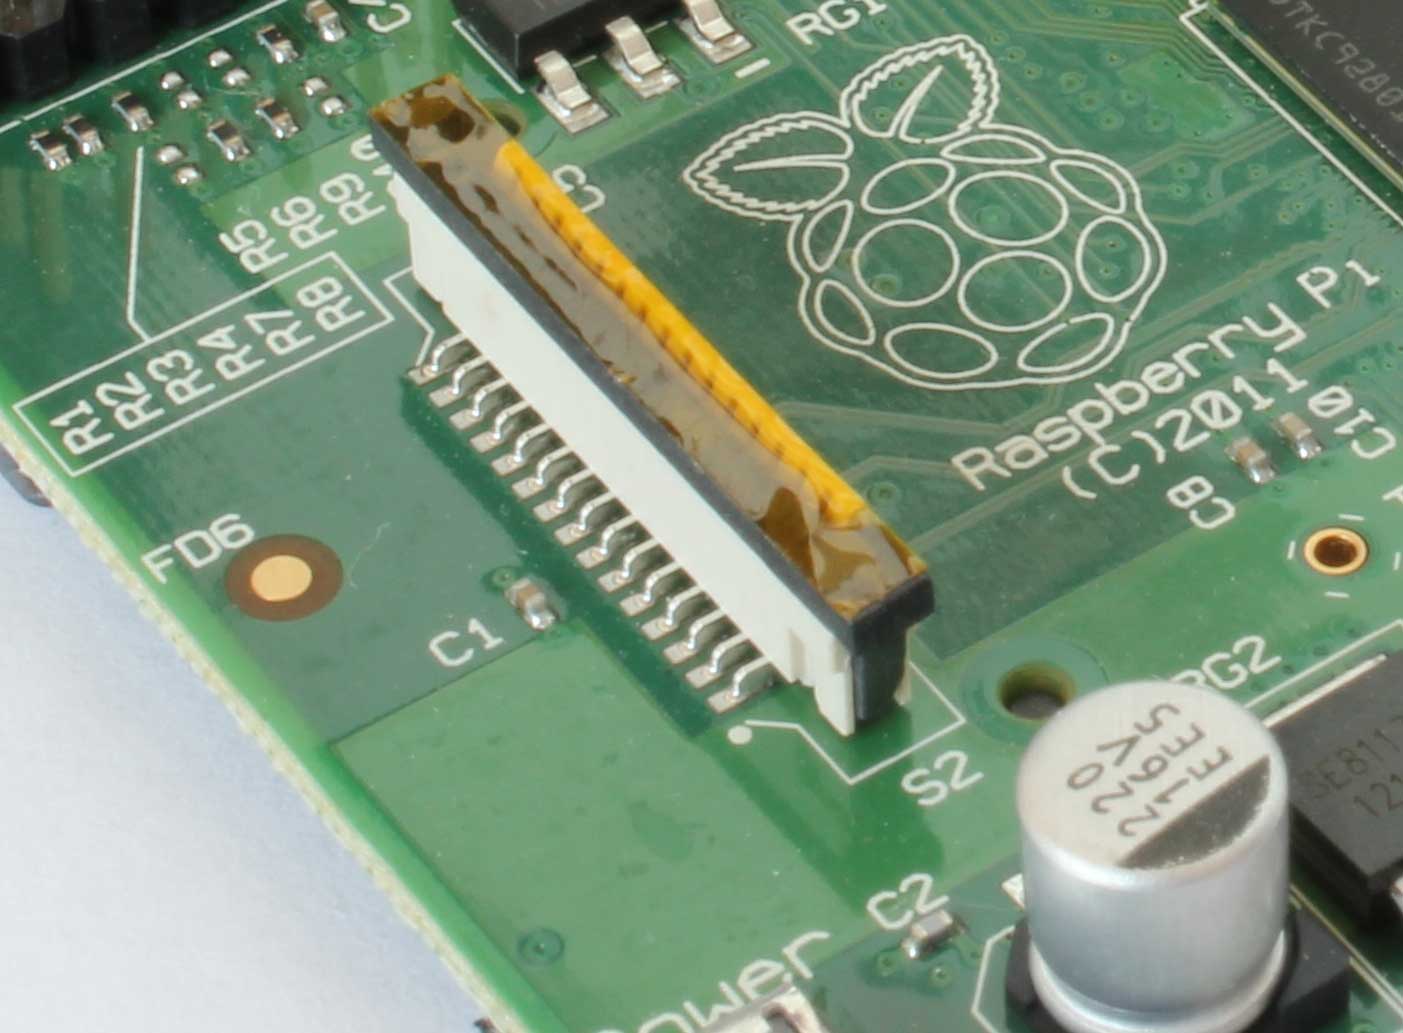 A MIPI DSI port on a Raspberry Pi